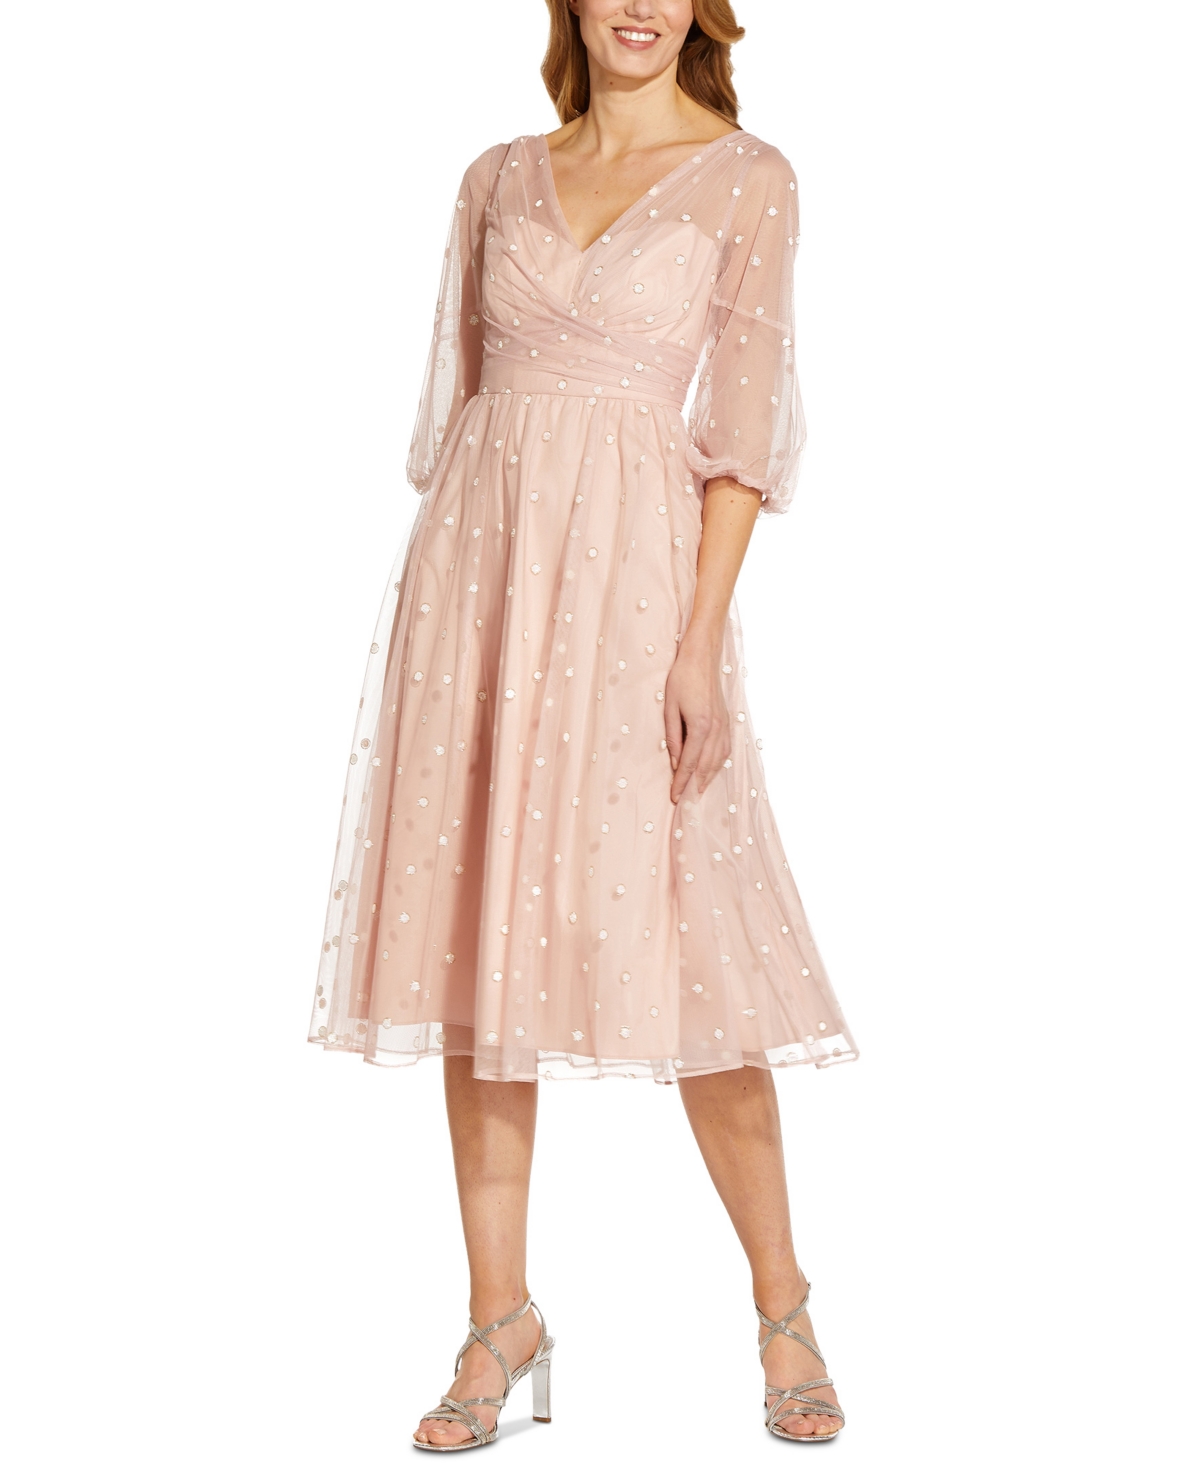 Vintage Style Dresses | Vintage Inspired Dresses Adrianna Papell Fit  Flare Midi Dress $160.30 AT vintagedancer.com